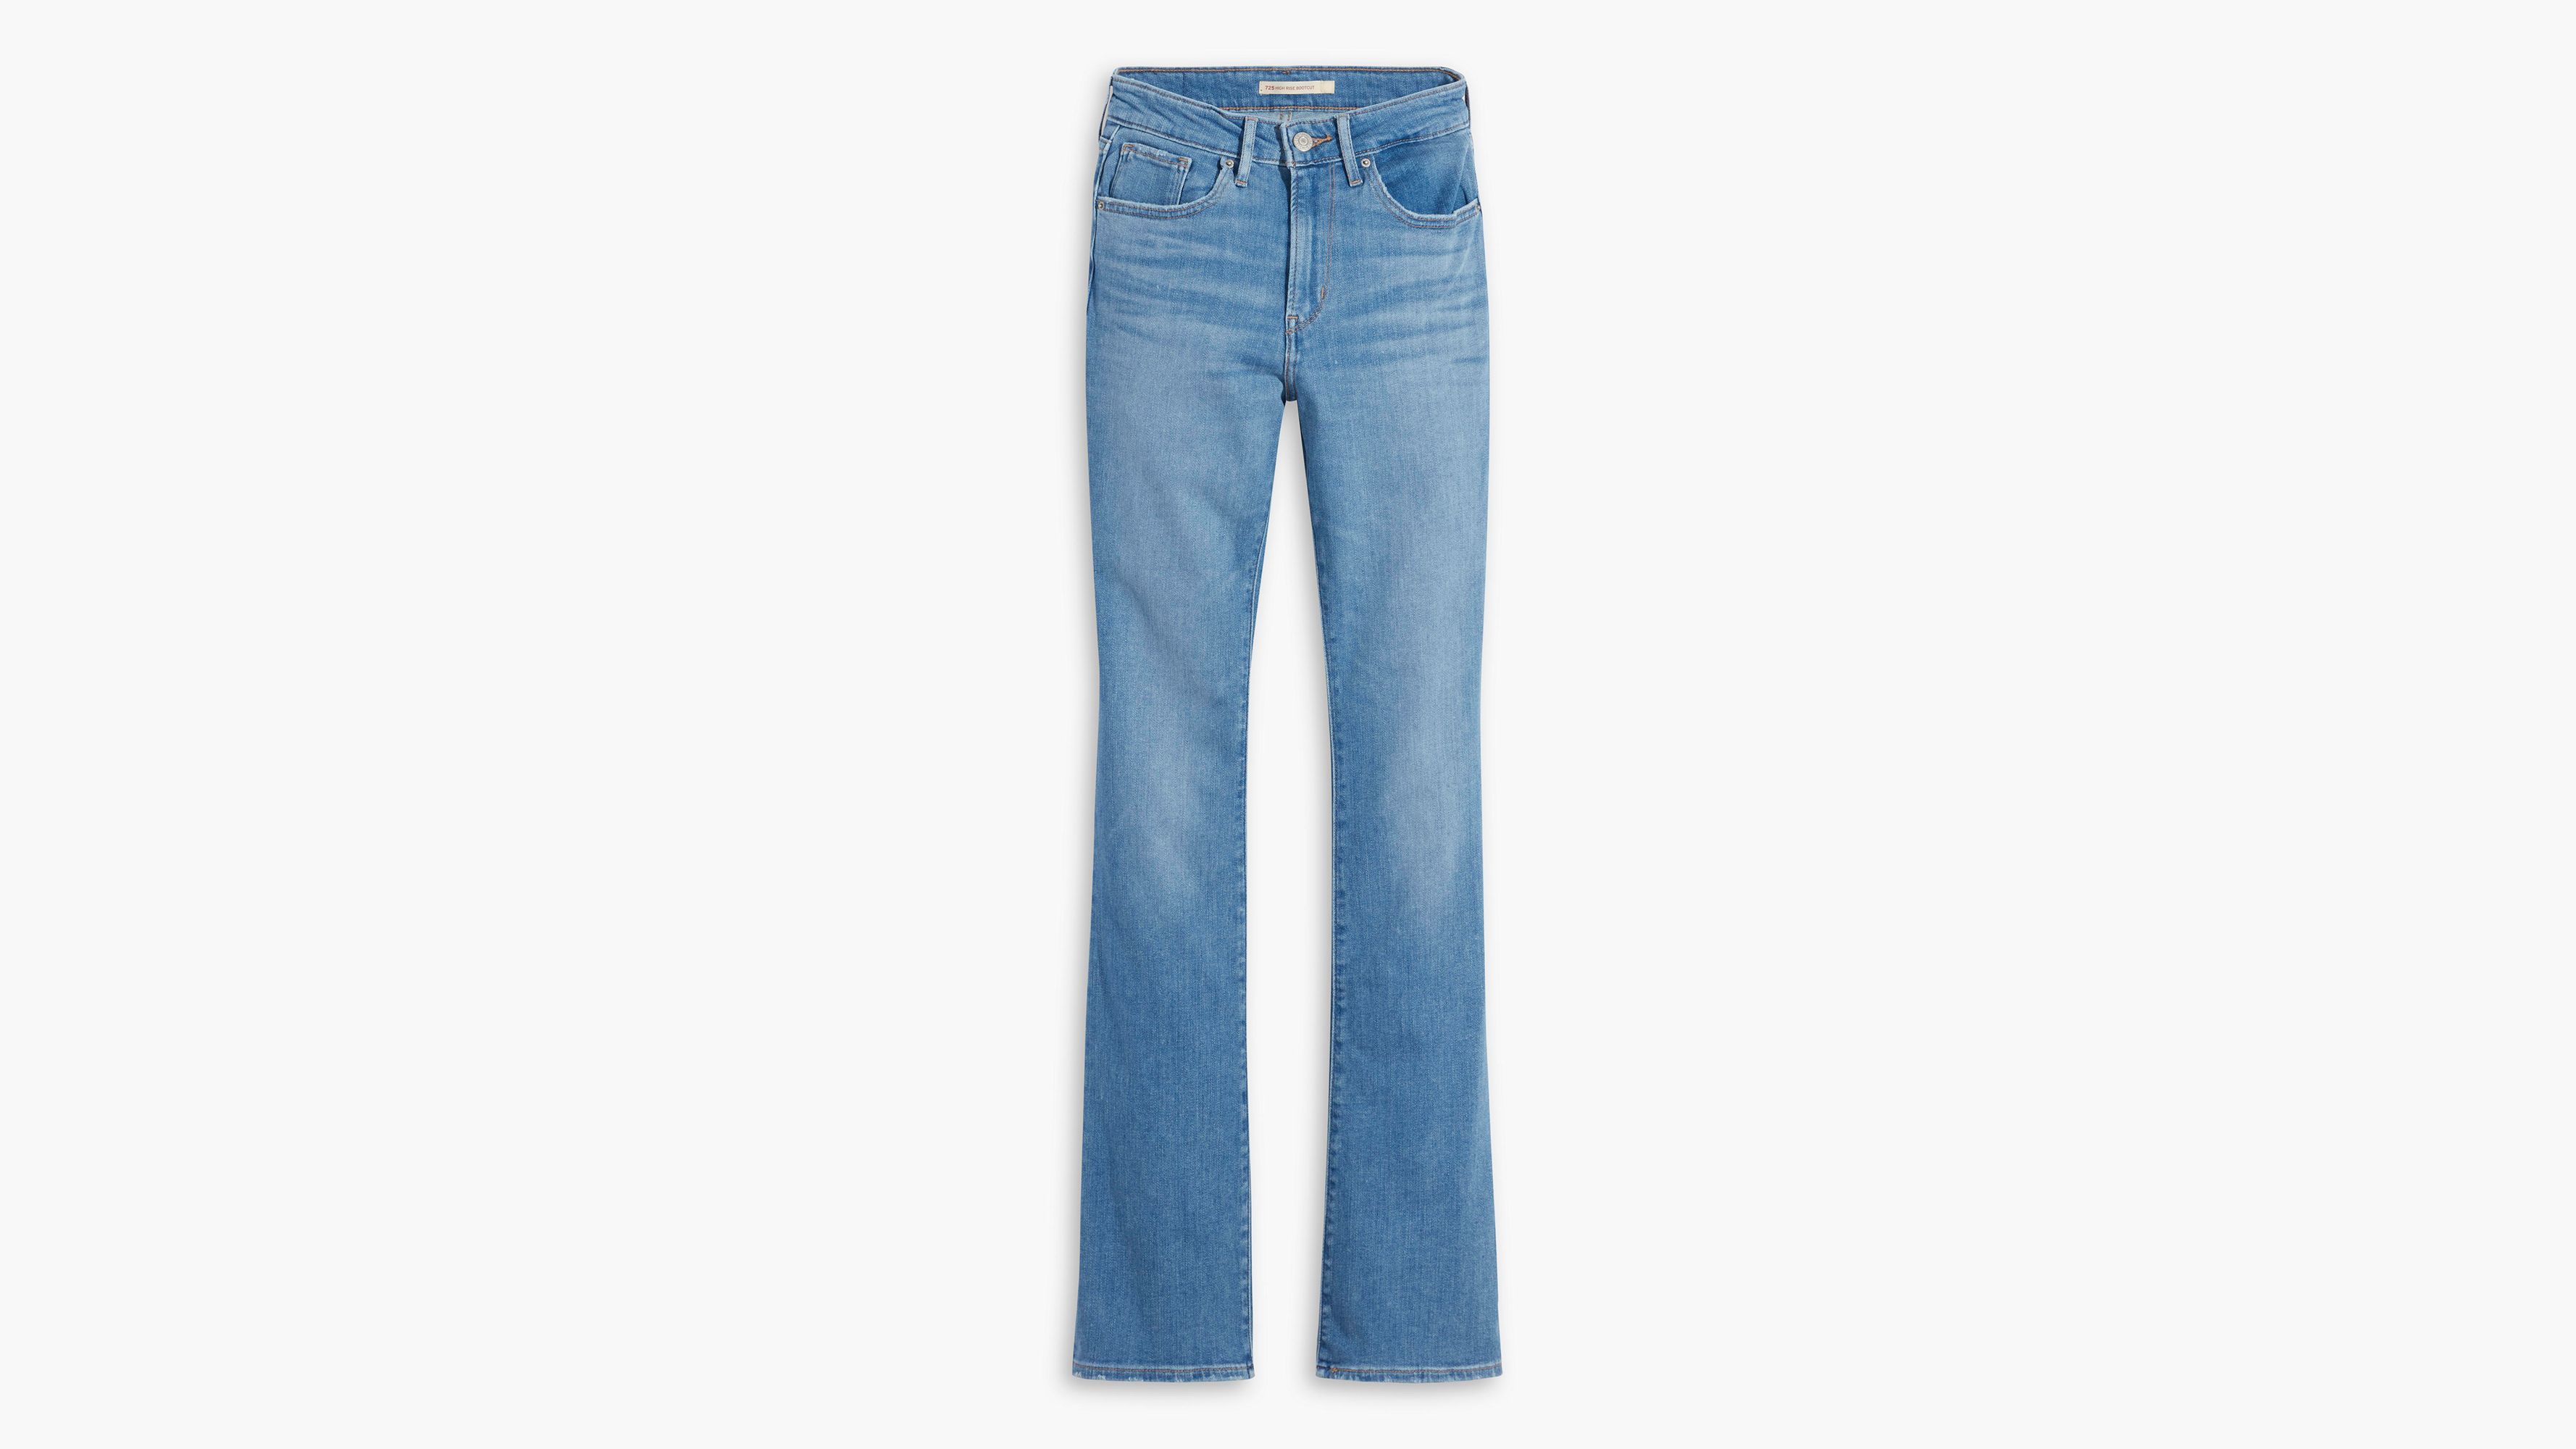 Levi's 725 high-rise Bootcut Jeans - Farfetch